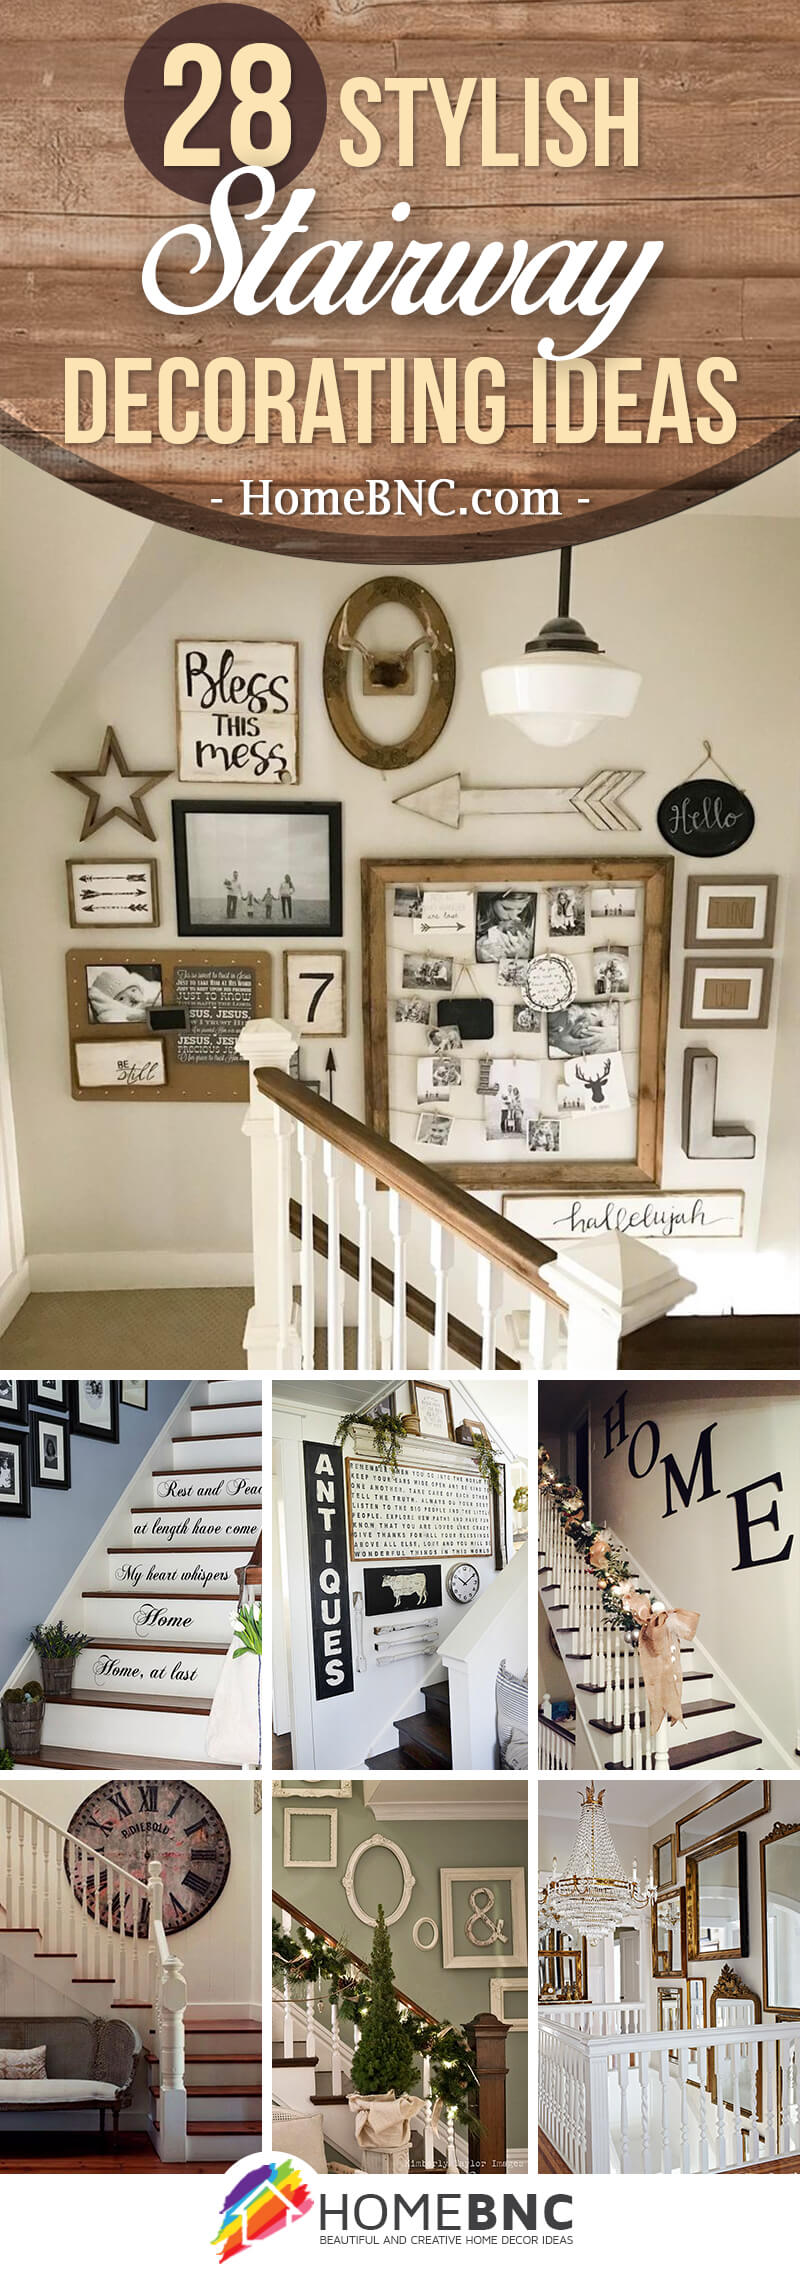 Stairway Decorating Ideas